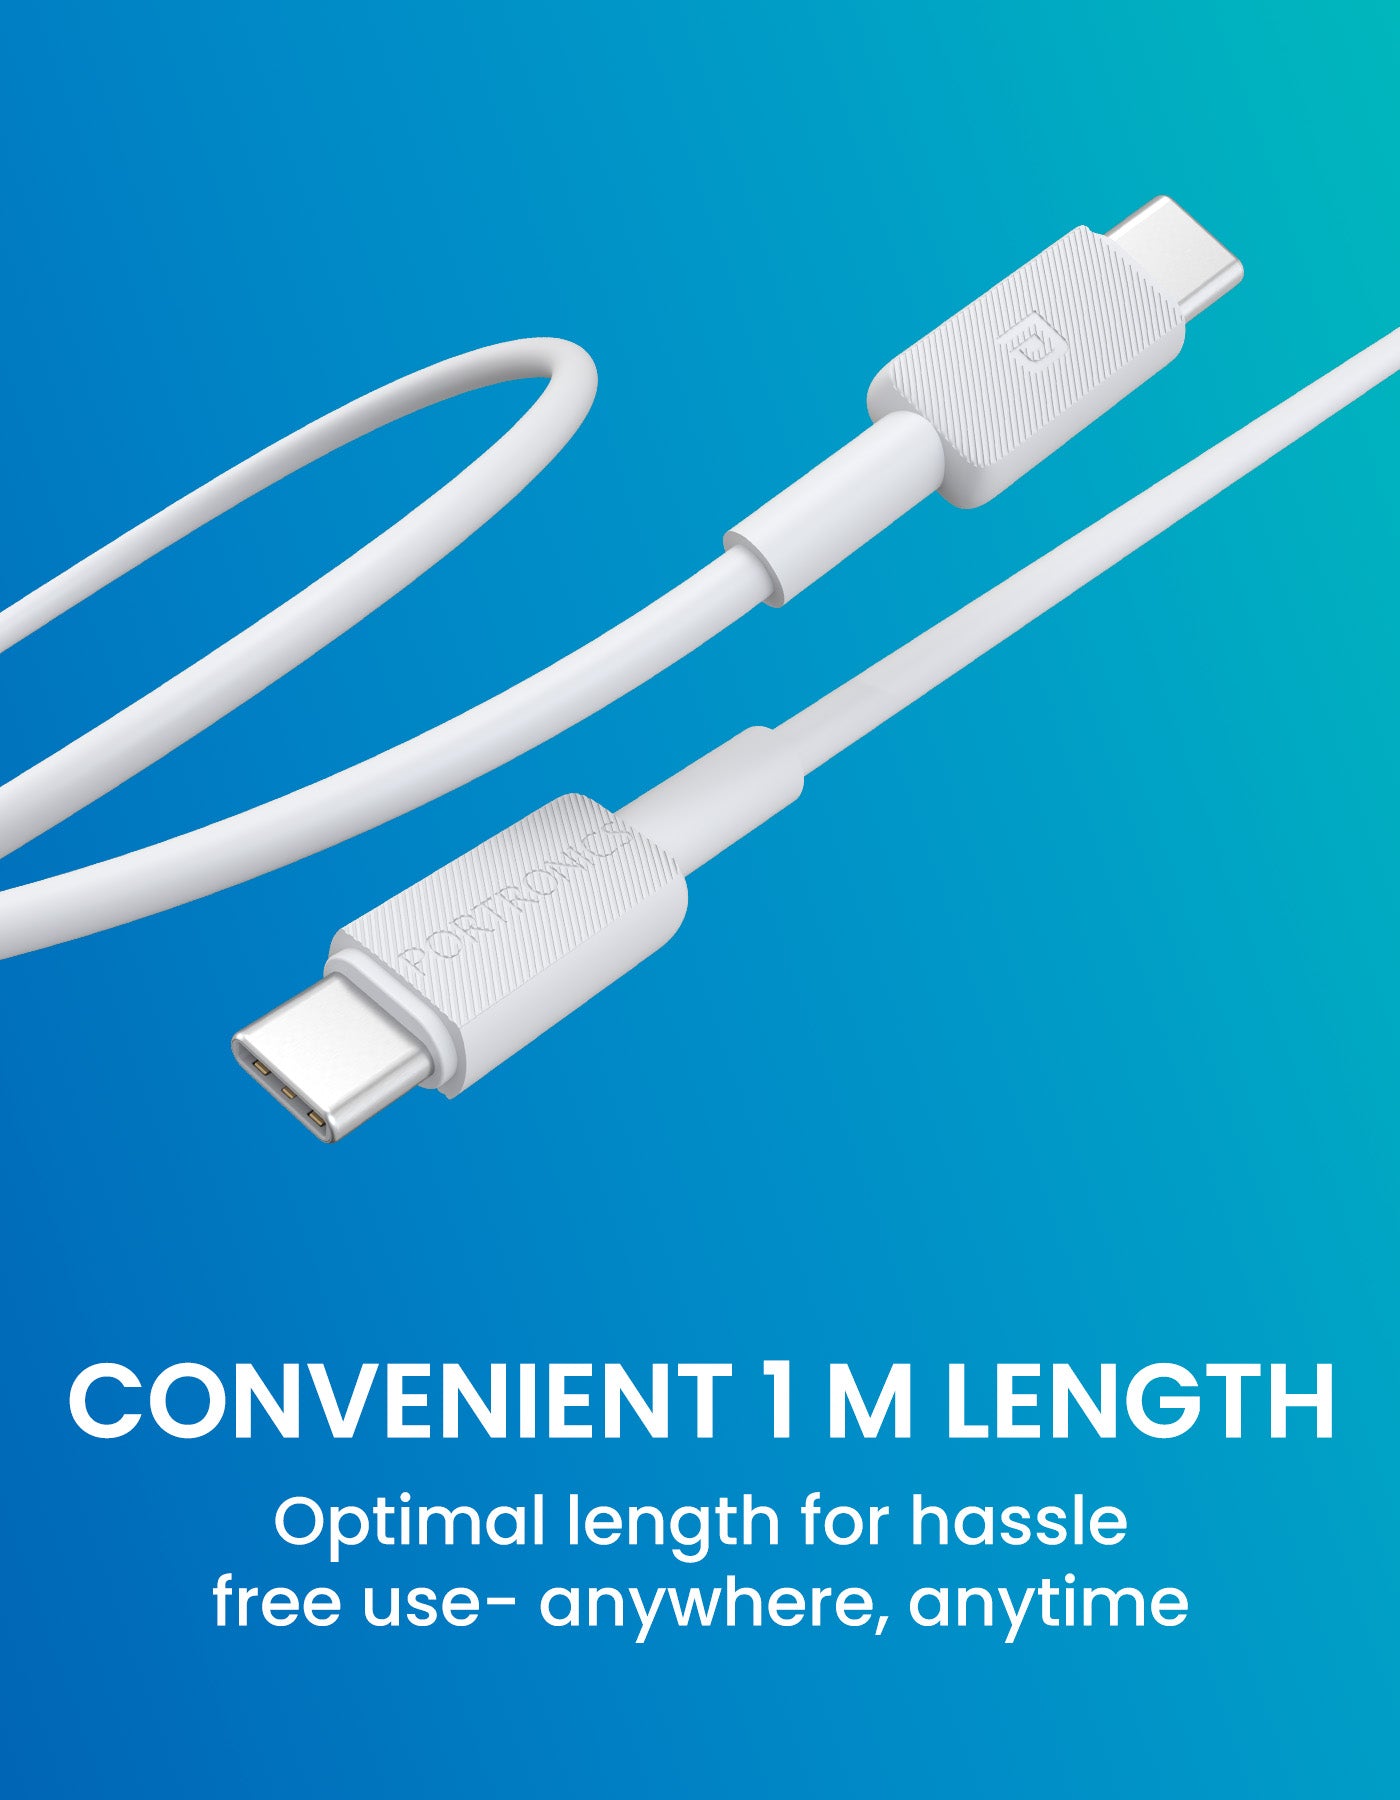 Portronics Konnect Link C Square 60W fast Charging cable| 60W Charging Cable| type c to type c cable with 1M length